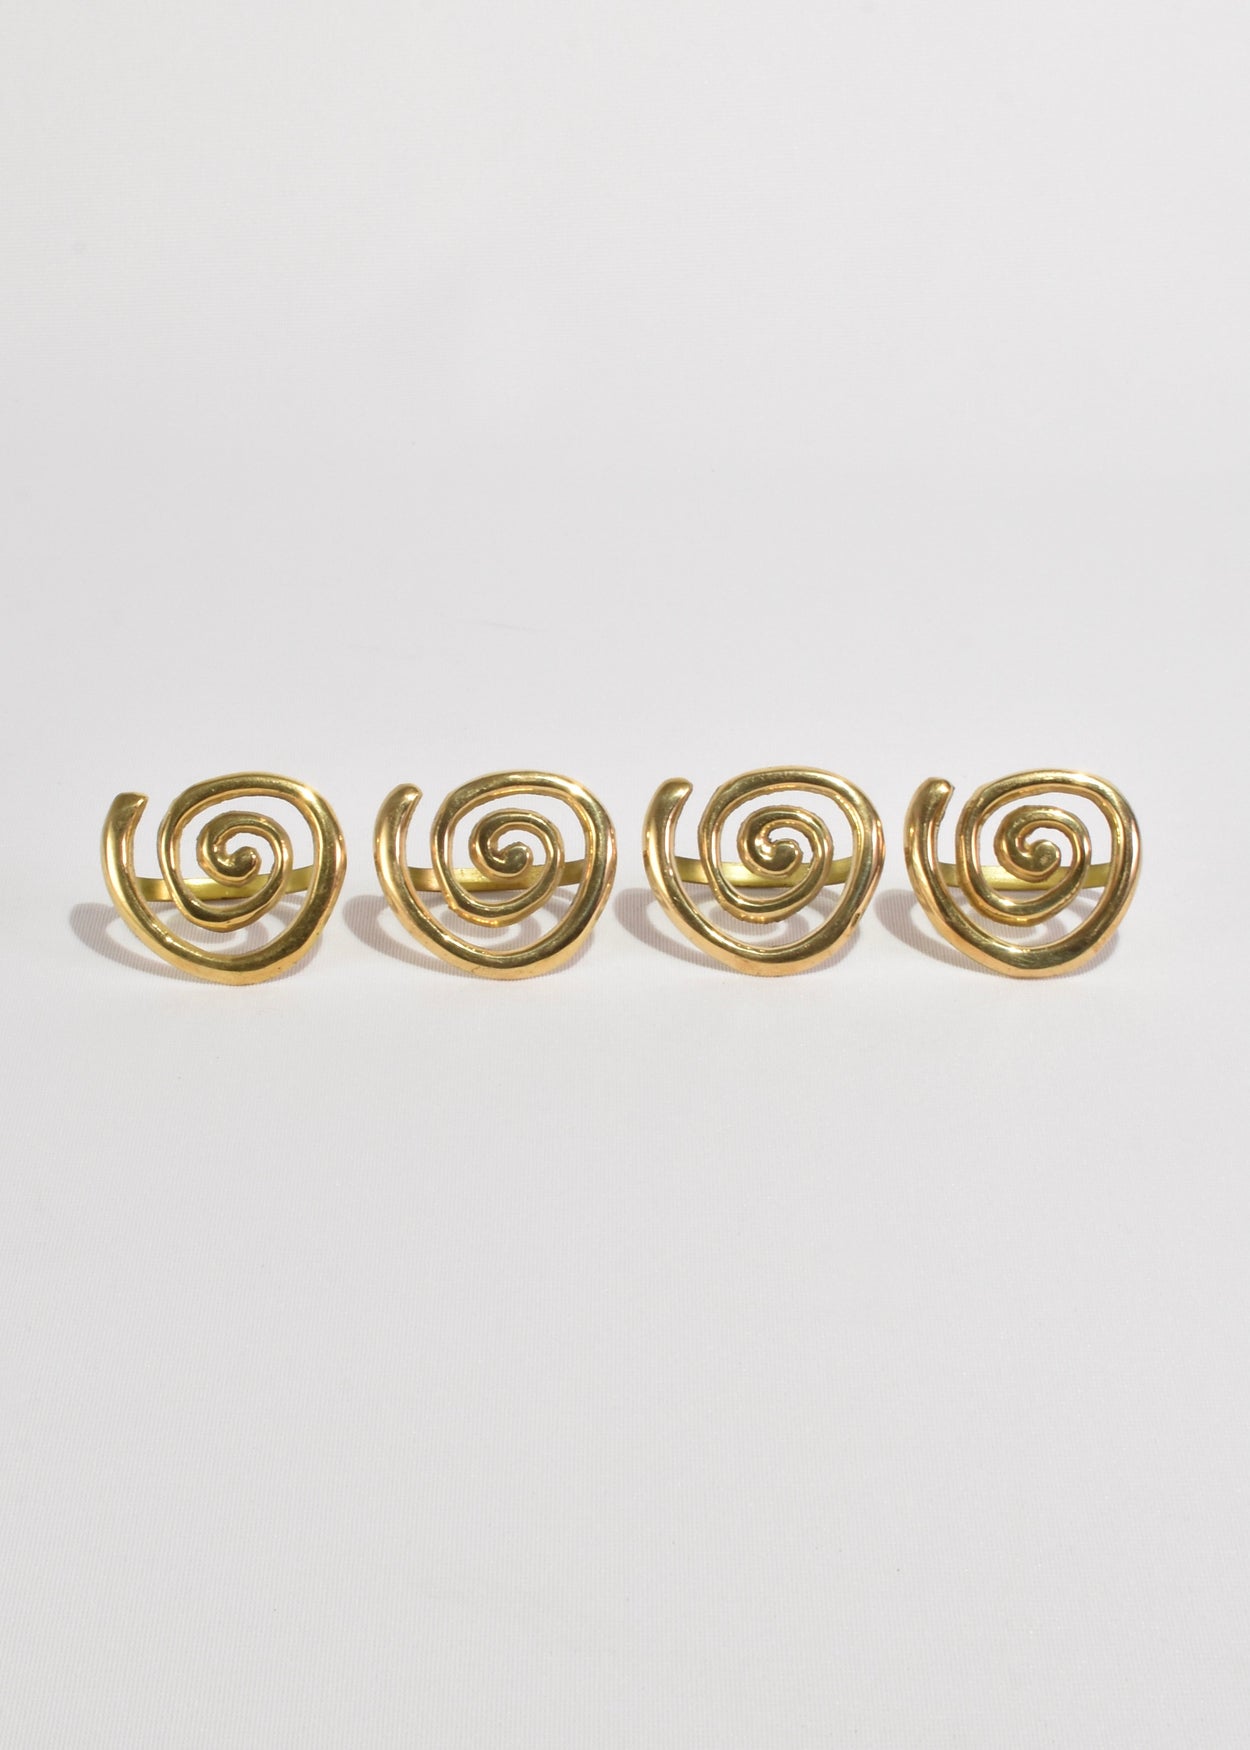 Brass Spiral Napkin Rings